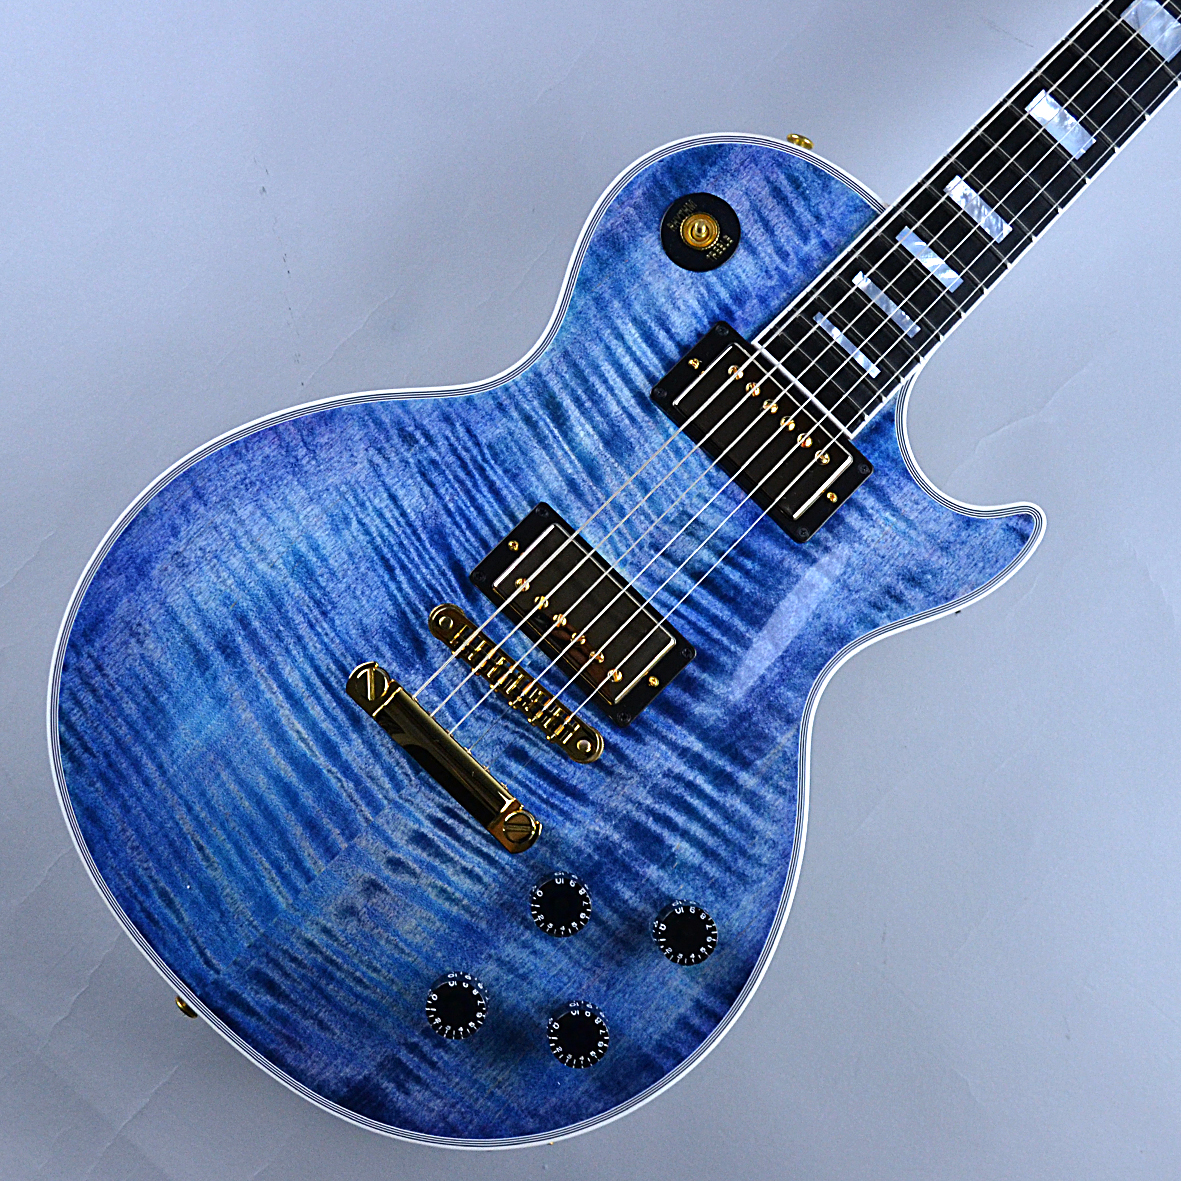 *Les Paul Custom Figured Nordic Blue |*ブランド|Gibson Custom Shop| |*型番|Les Paul Custom Figured Nordic Blue| |*商品の状態|新品| |*販売価格|[!￥571,320(税込)!]| |*ボディタイ […]